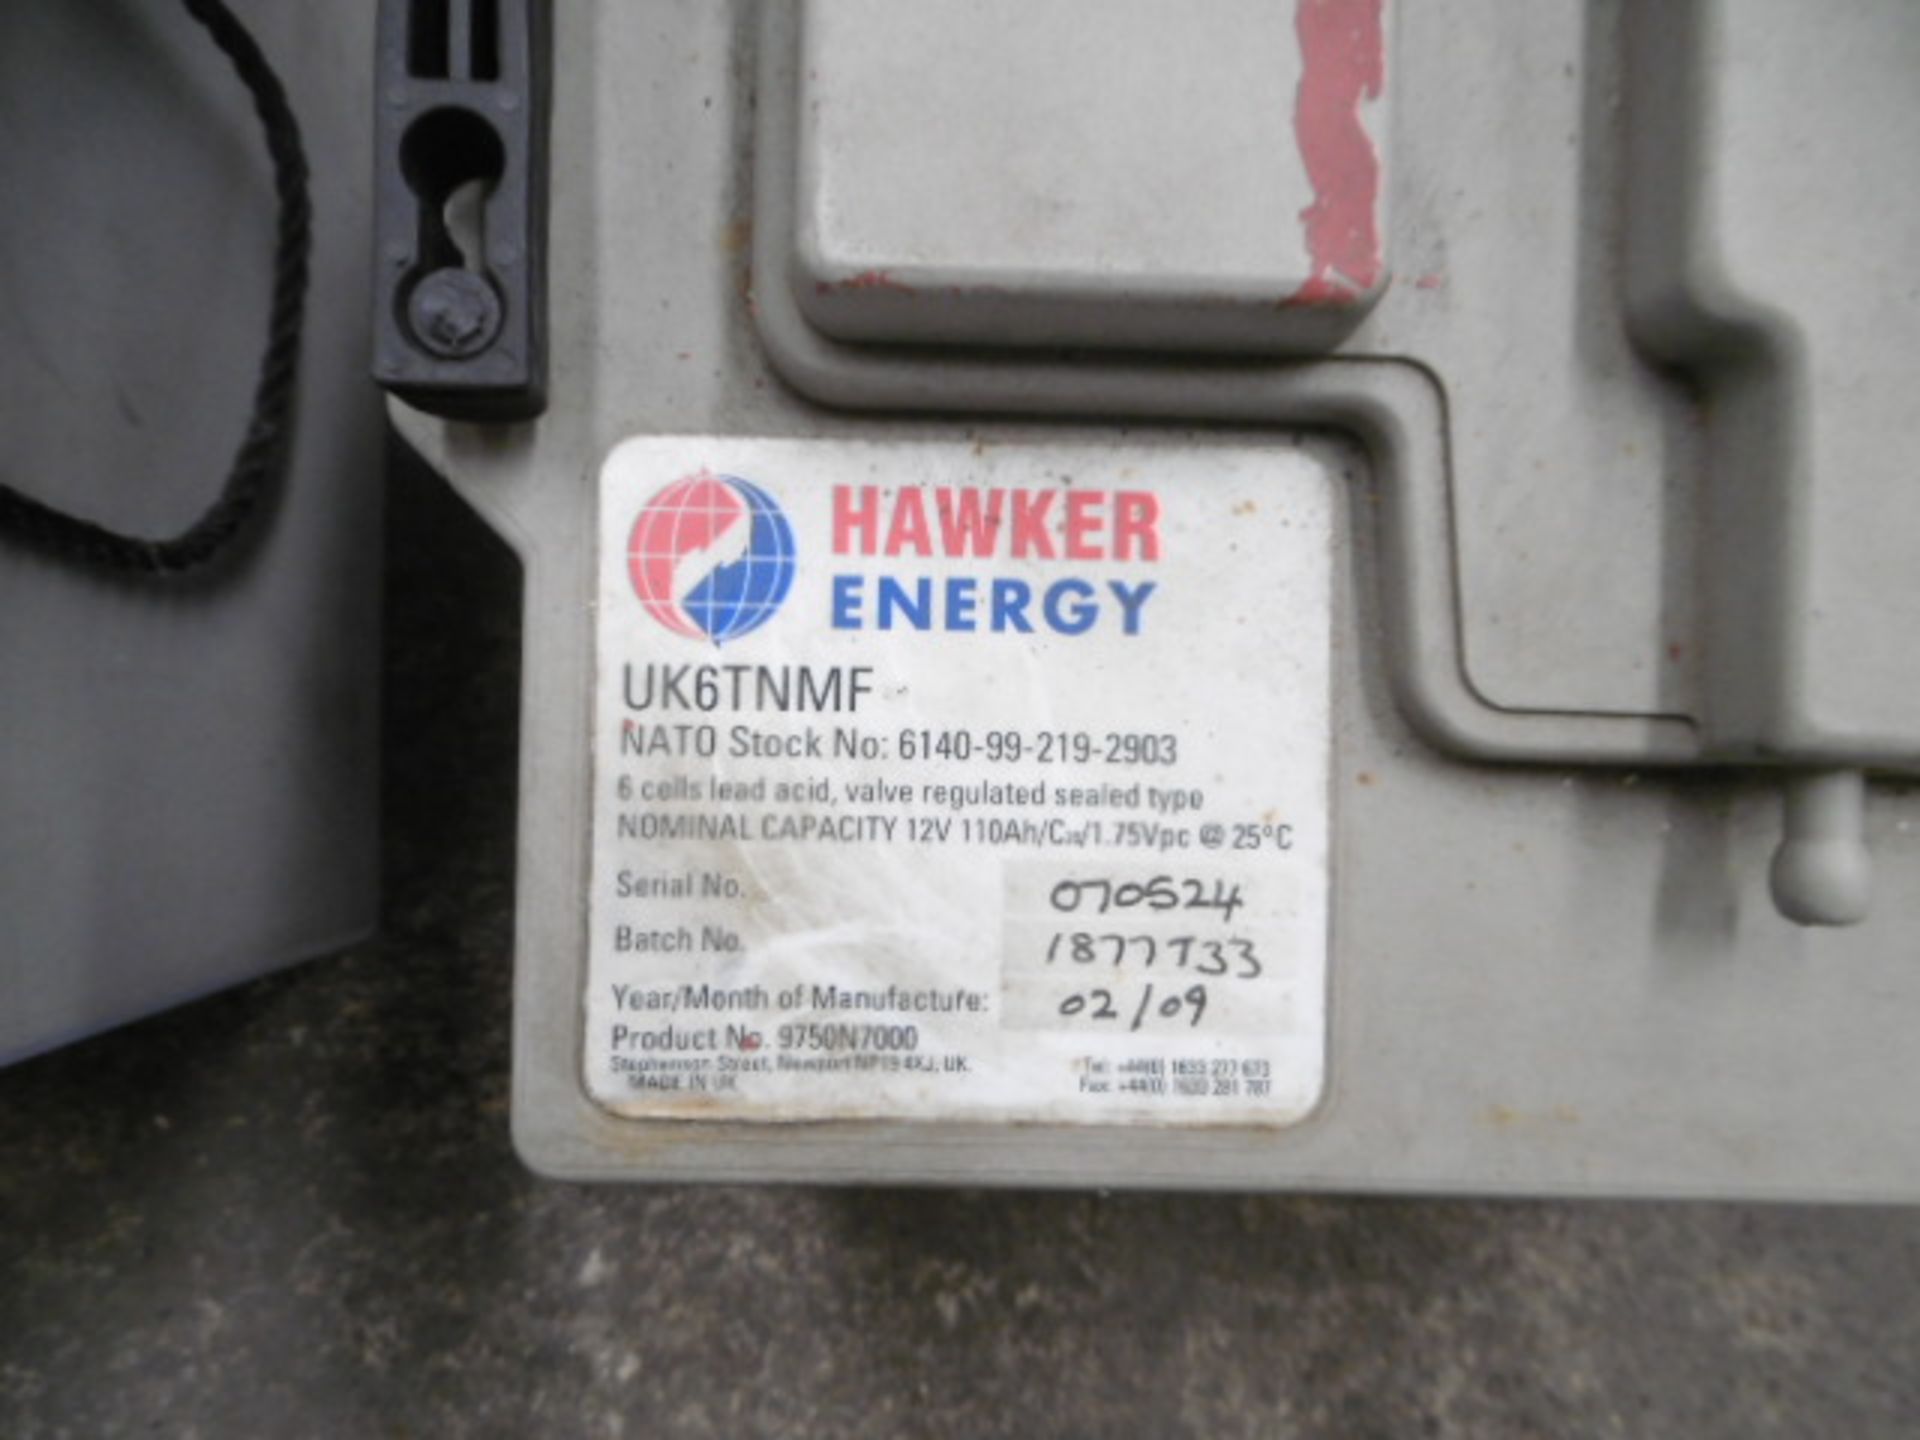 2 x Hawker UK6TNMF Rechargable Batteries - Image 4 of 4